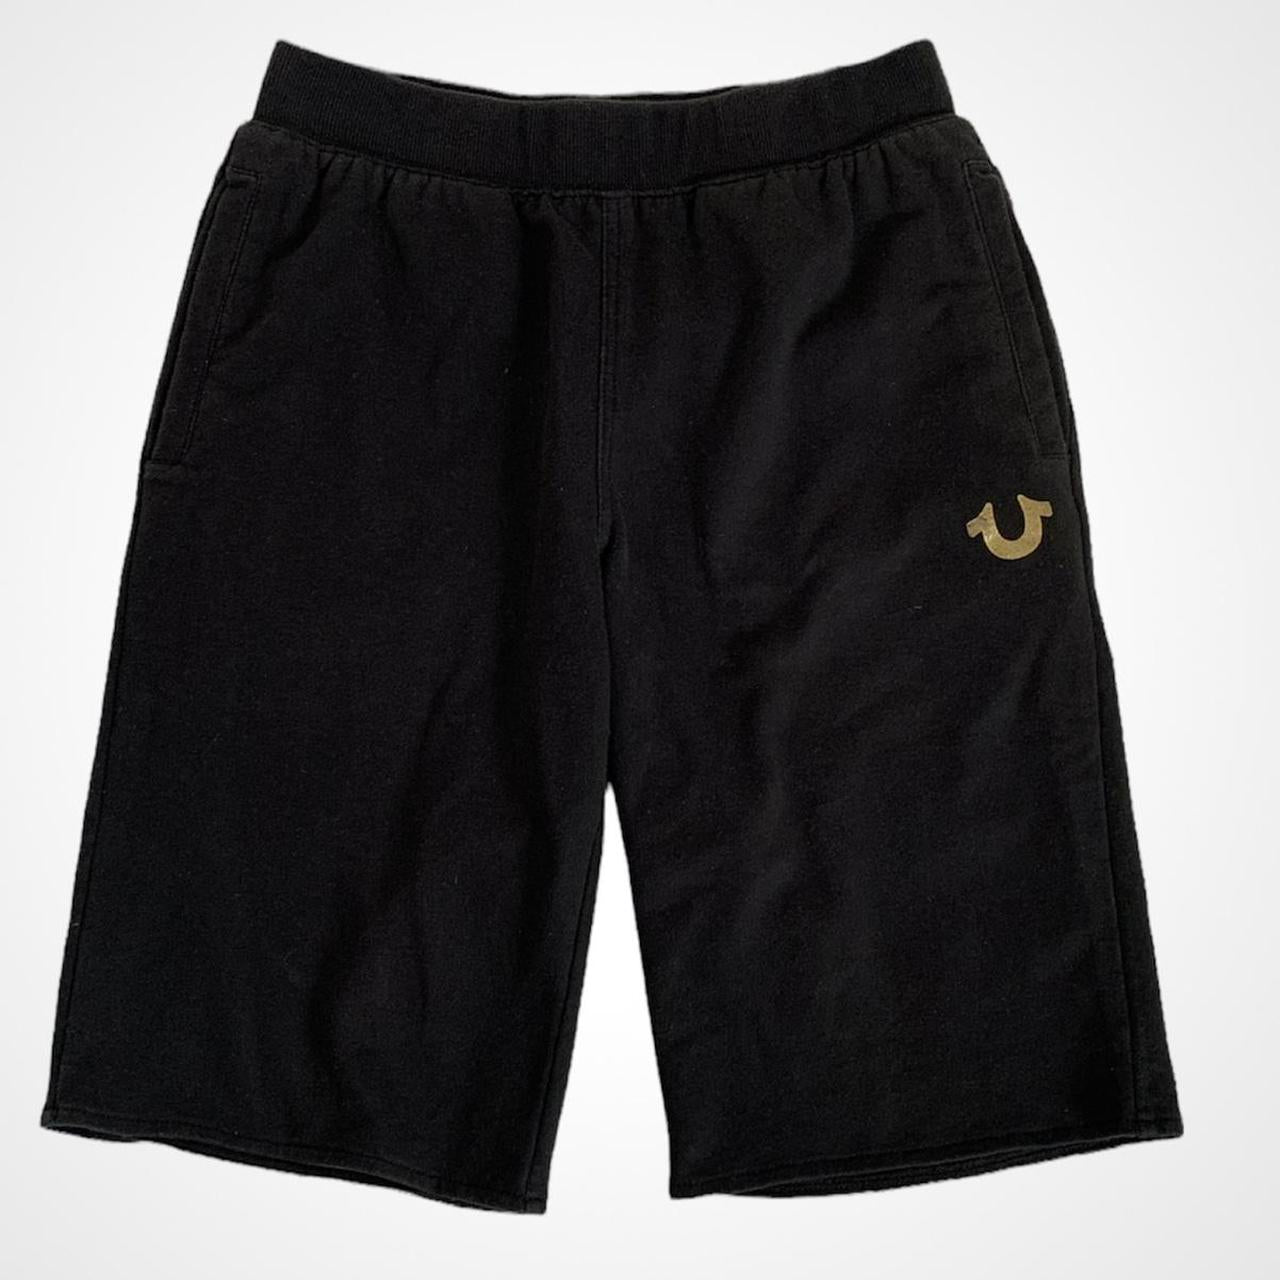 True Religion gold and black boyfriend/Bermuda shorts